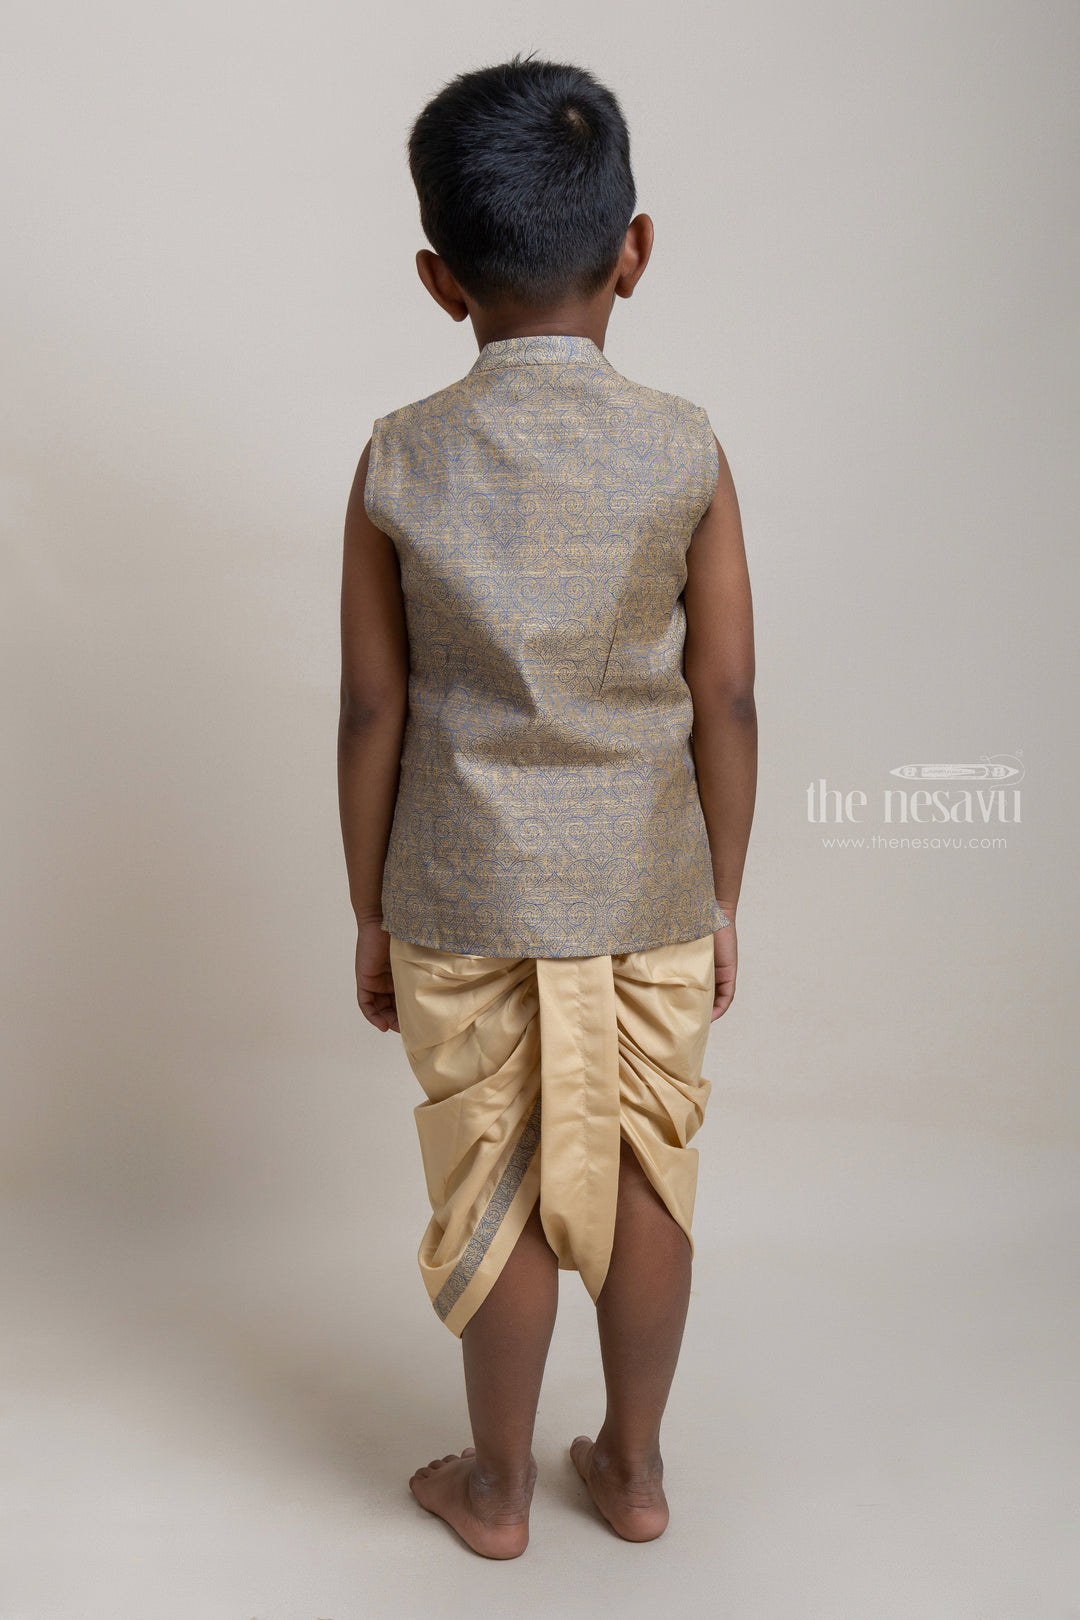 The Nesavu Boys Dothi Set Premium Designer Gray Ethnic kurta With Contrast Dhoti For Boys Nesavu Trendy Premium Wear For Boys | Ethnic Wear Collection | The Nesavu